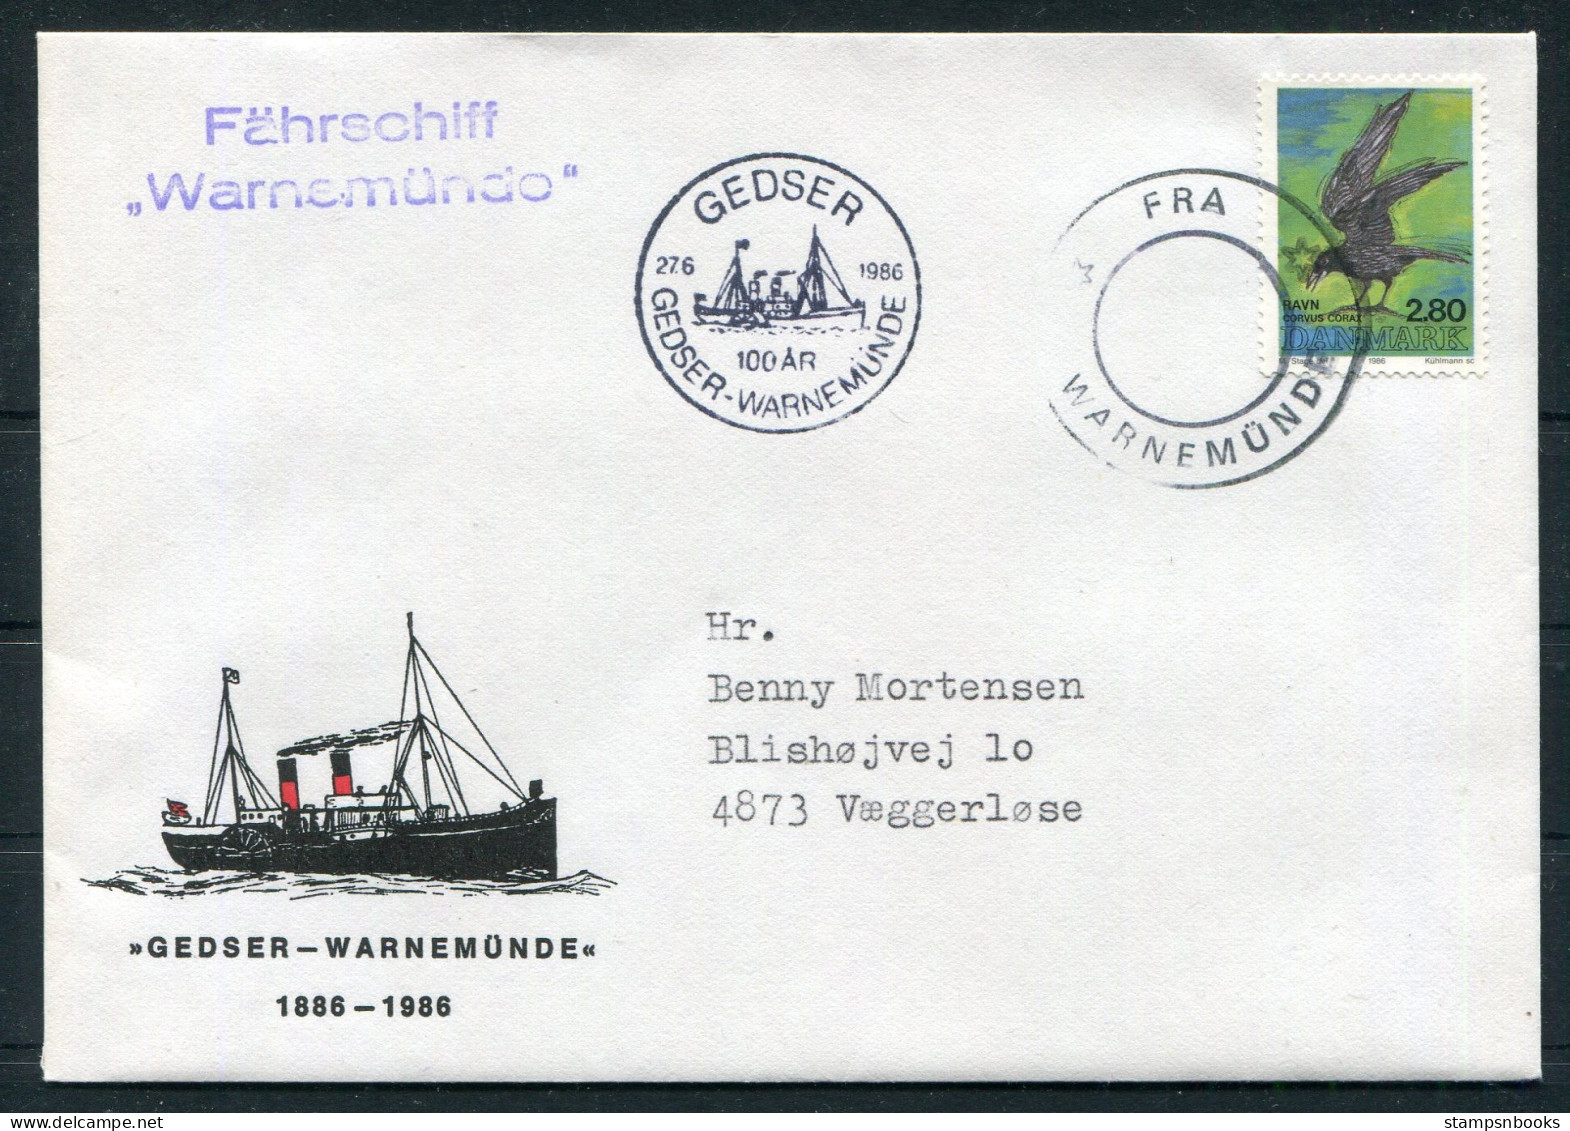 1986 Denmark Germany "Fra Warnemünde" Paquebot Gedser Fahrschiff "Warnemünde" Ship Cover. 2.80kr Birds - Briefe U. Dokumente